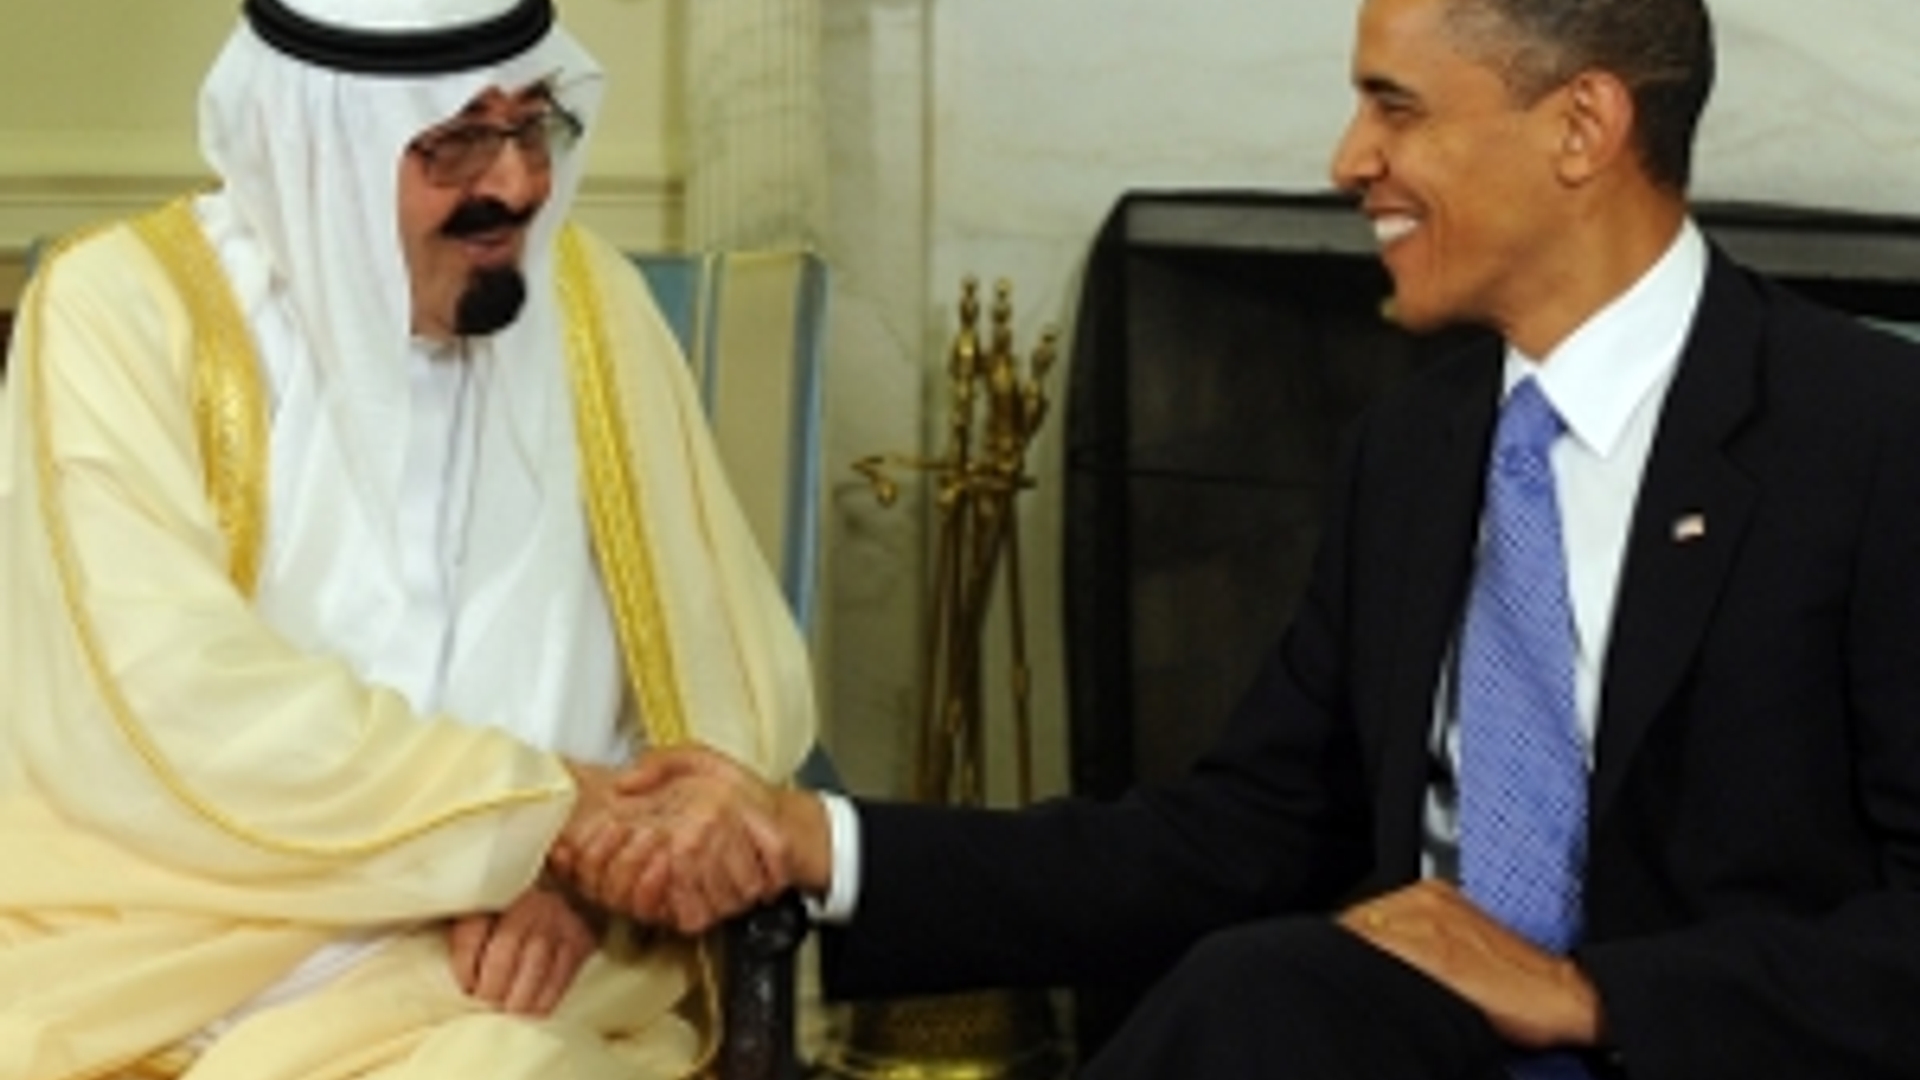 ANP-Obama_SaudischeKoningAbdullah300.jpg